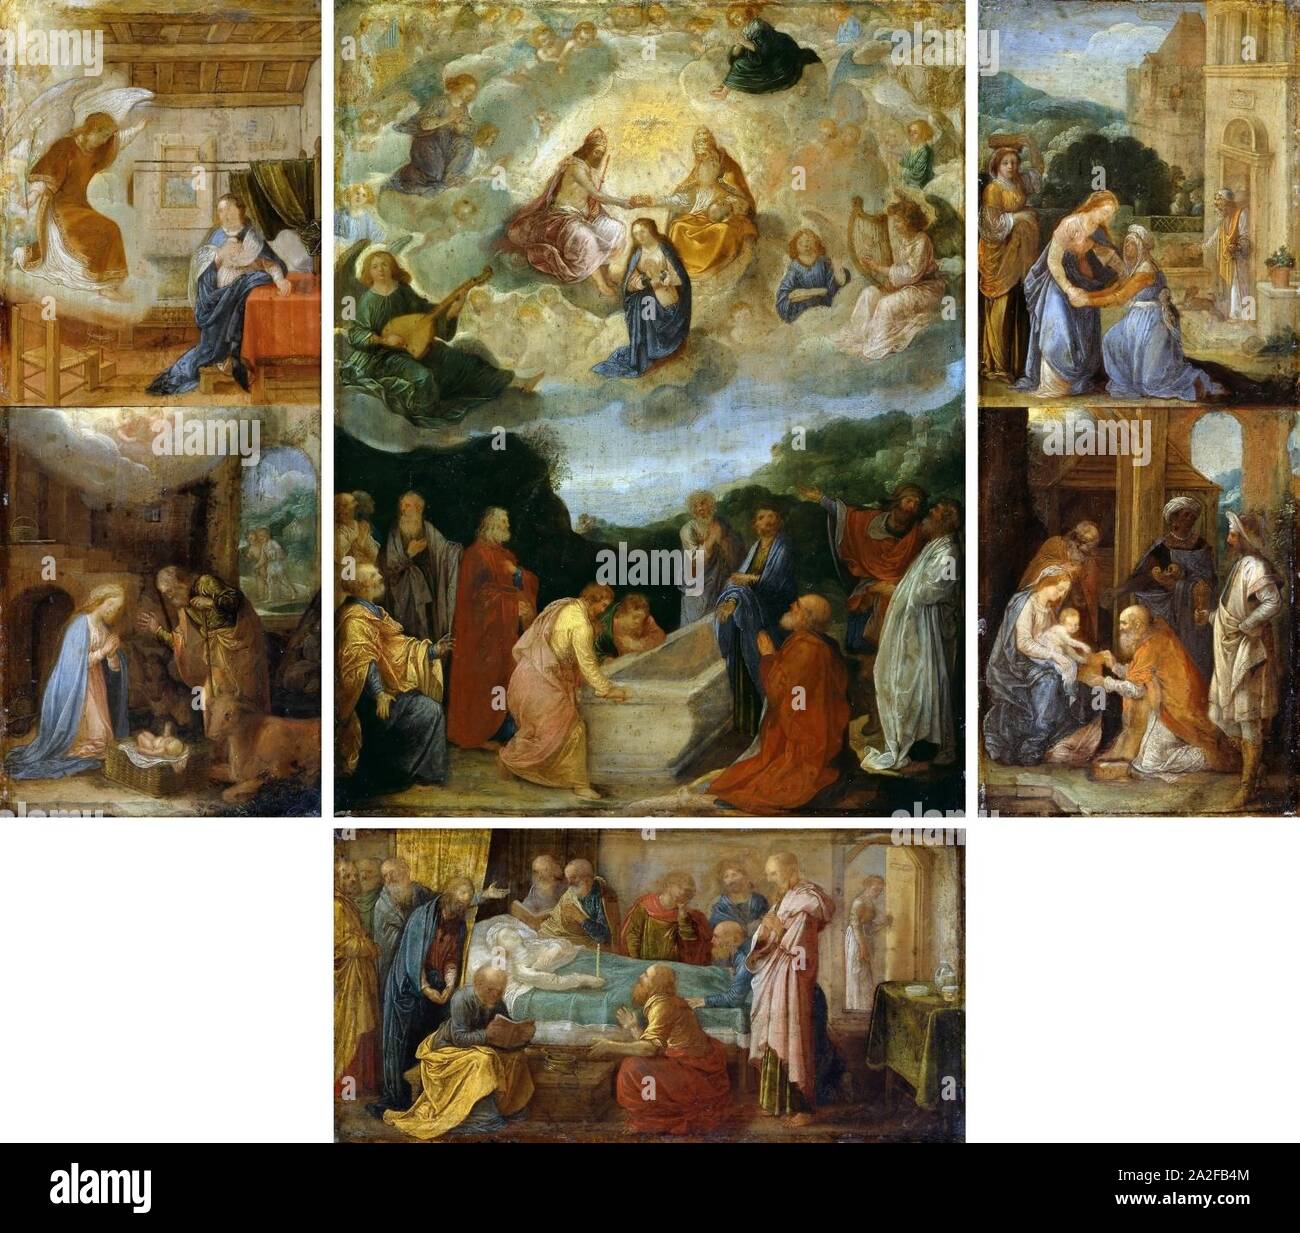 Richard Dadd - Hausaltar mit sechs Szenen aus dem Leben der Jungfrau Maria. Banque D'Images